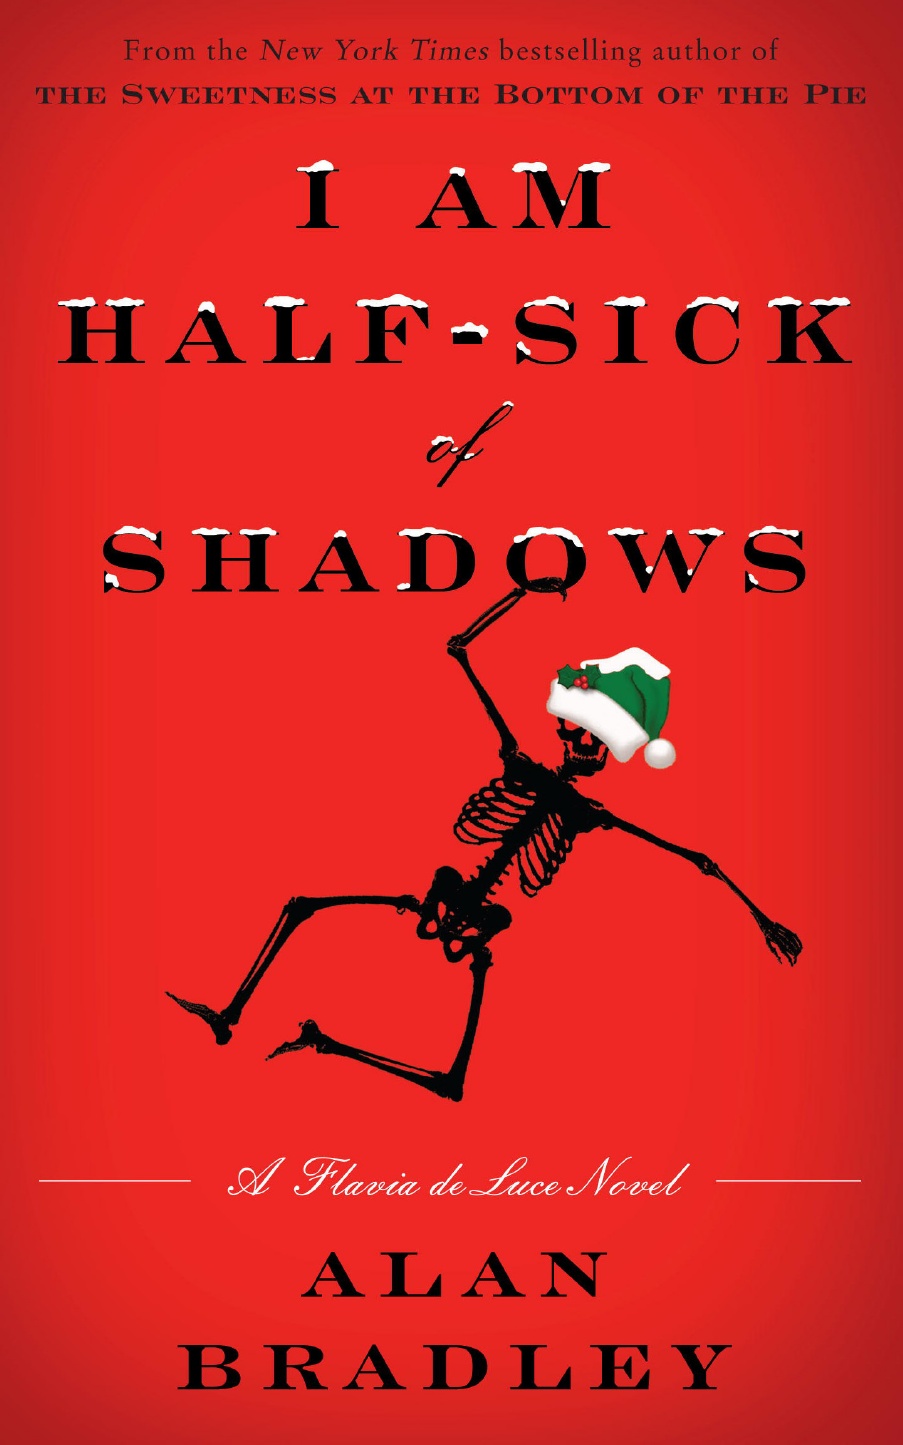 I-Am-Half-Sick-of-Shadows